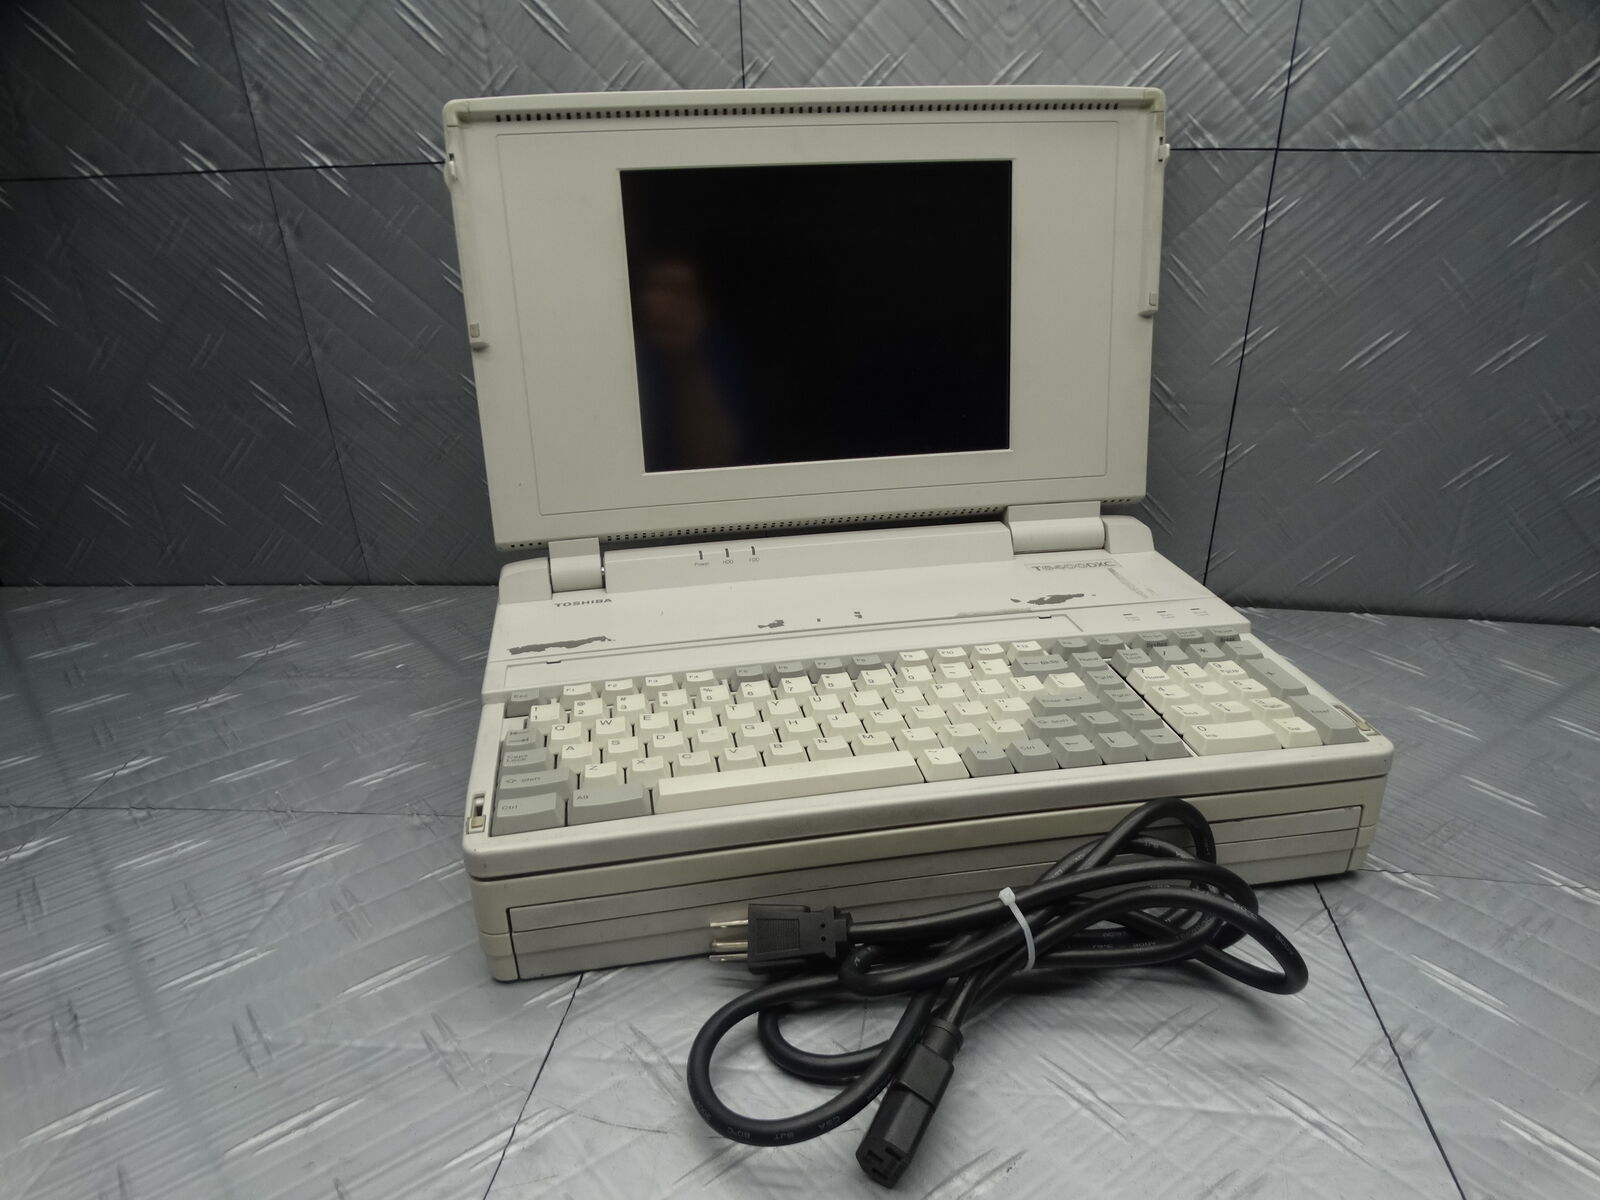 Toshiba Vintage Laptop Intel i486 T6400DXC/200 (Powers On)